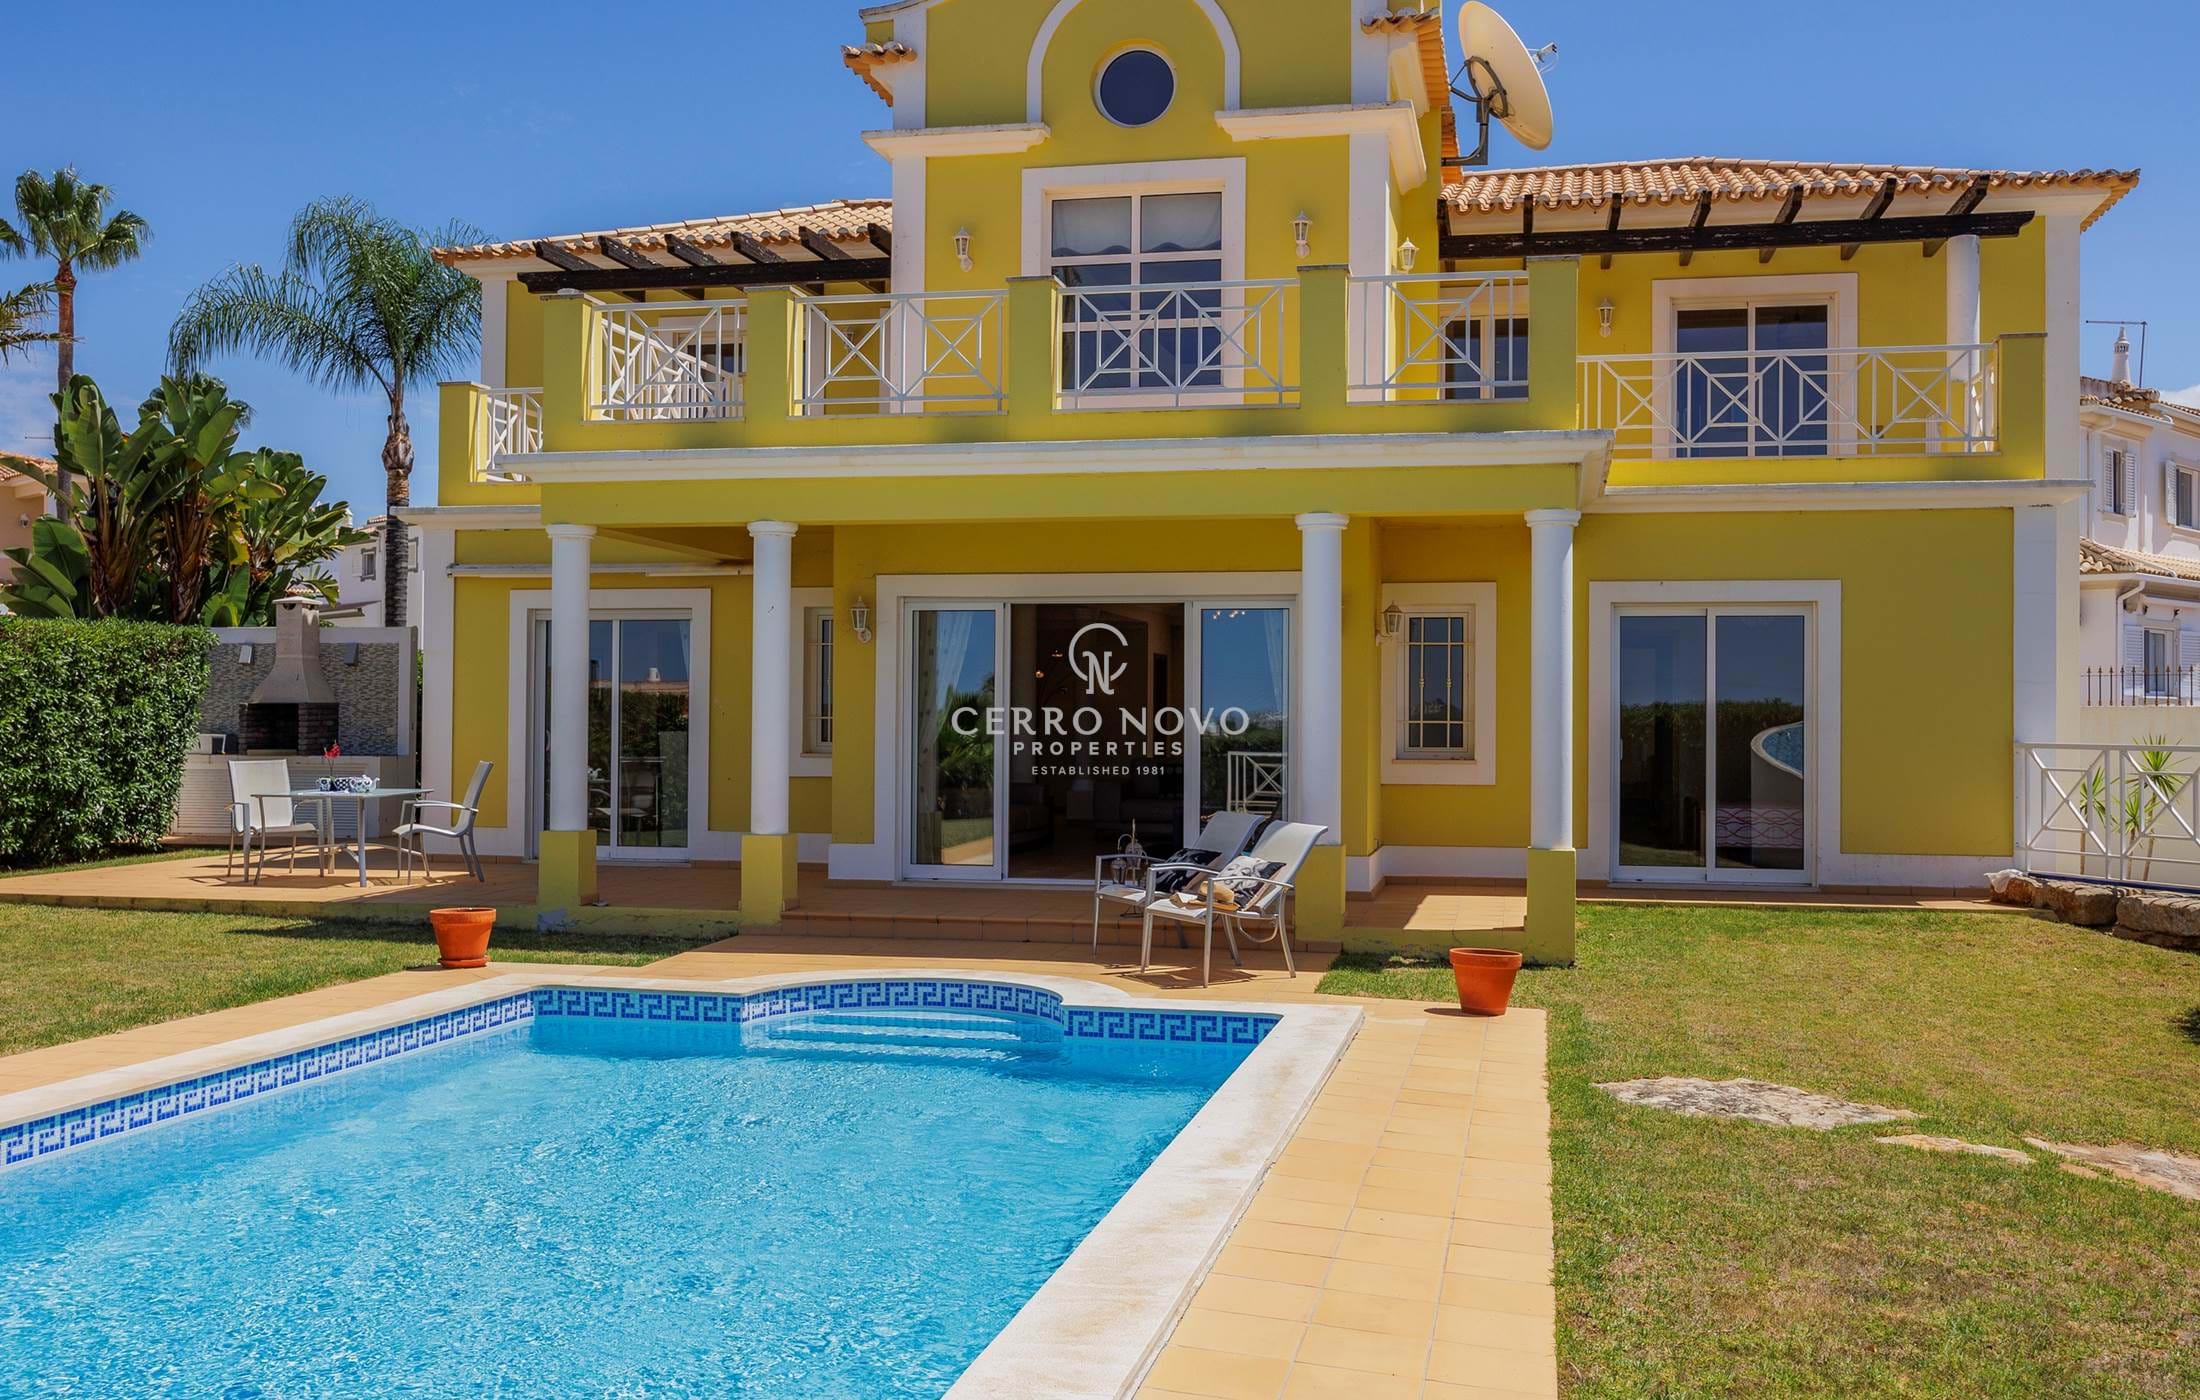 Elegant detached four bedroom villa with stunning interiors